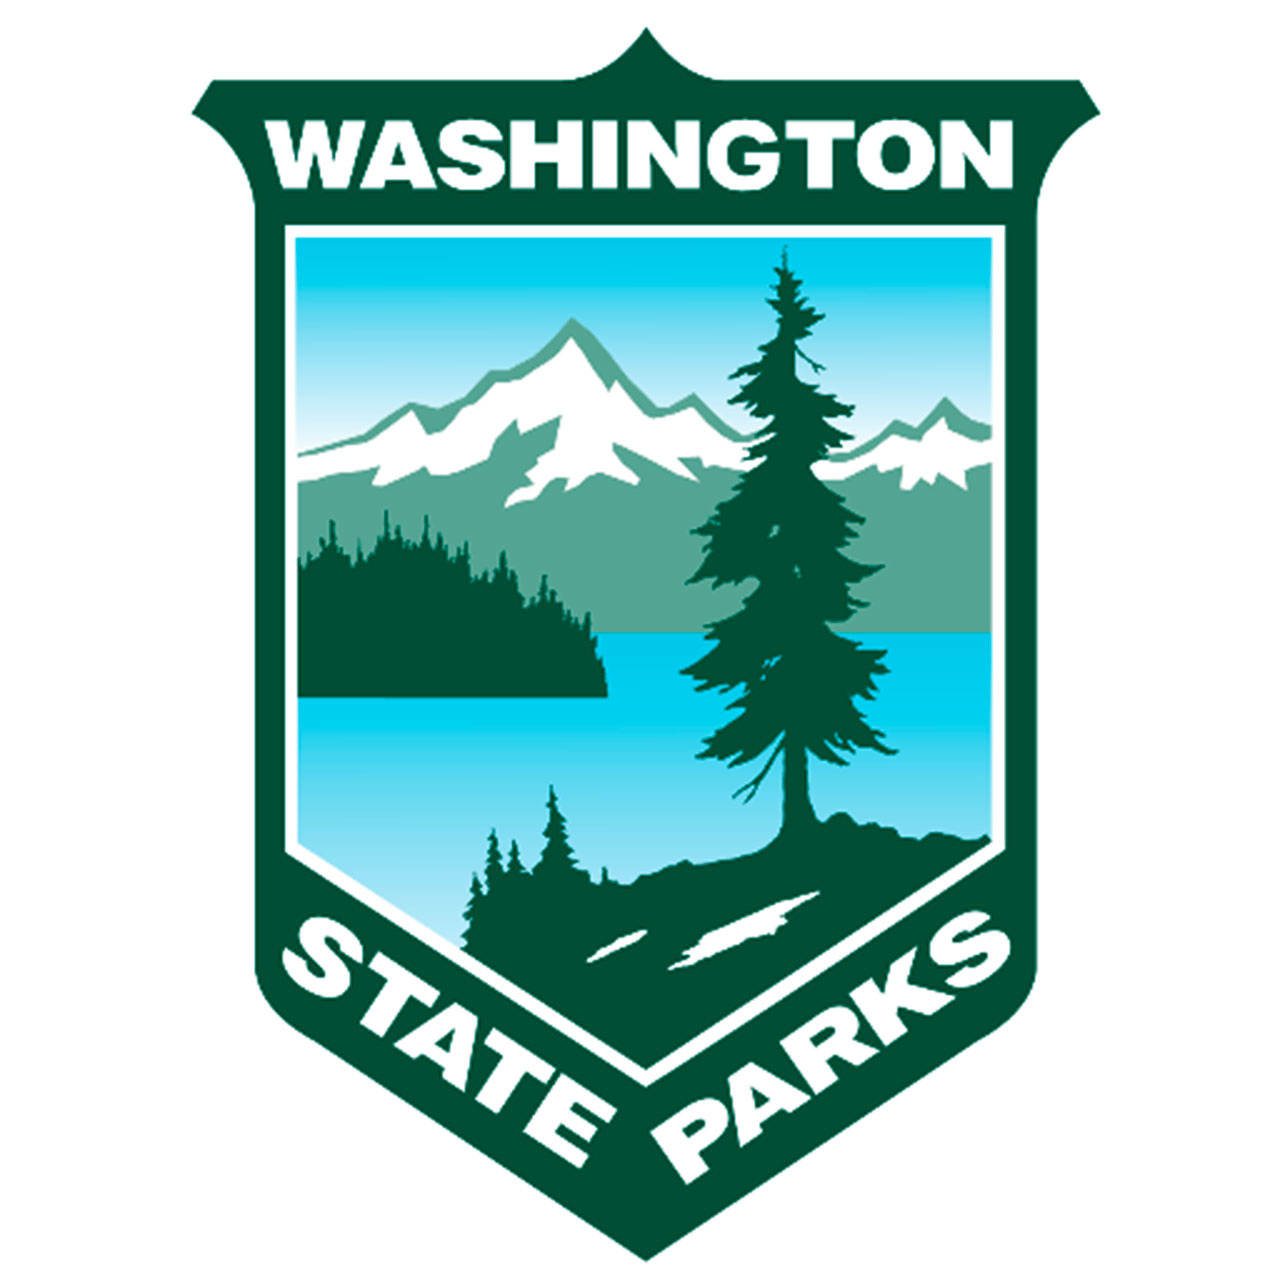 Free Washington State Park day on Sept. 22